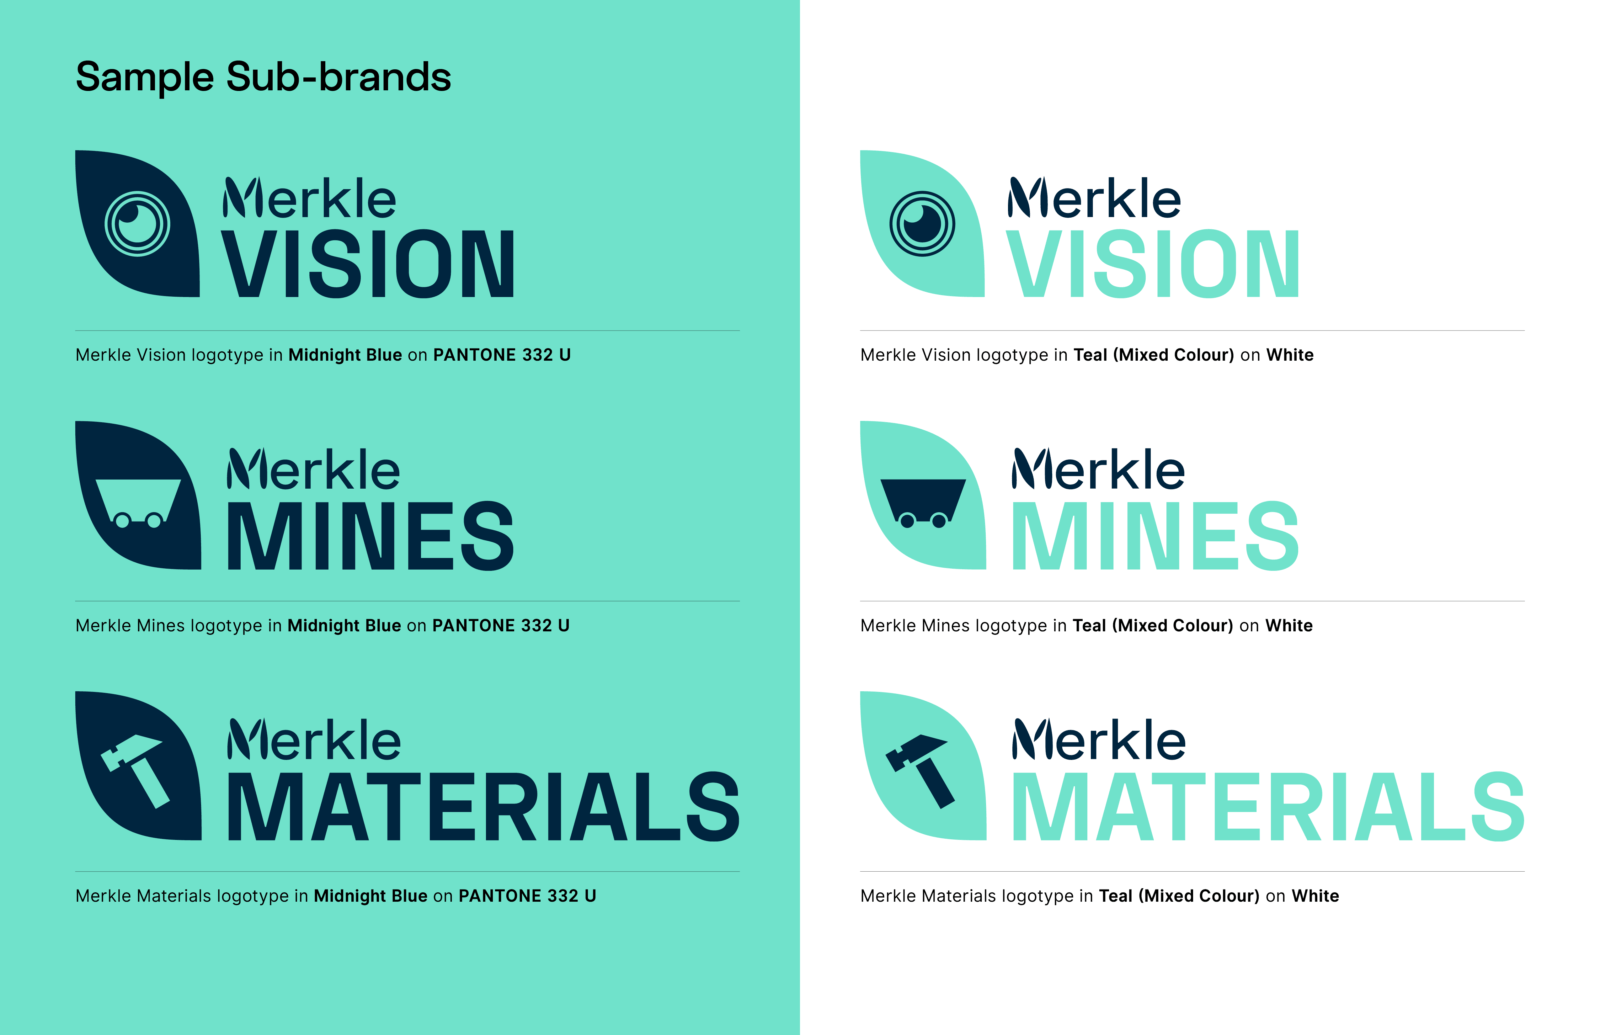 An array of potential Merkle sub-brands with corresponding logos: Merkle Vision, Merkle Mines, and Merkle Materials.